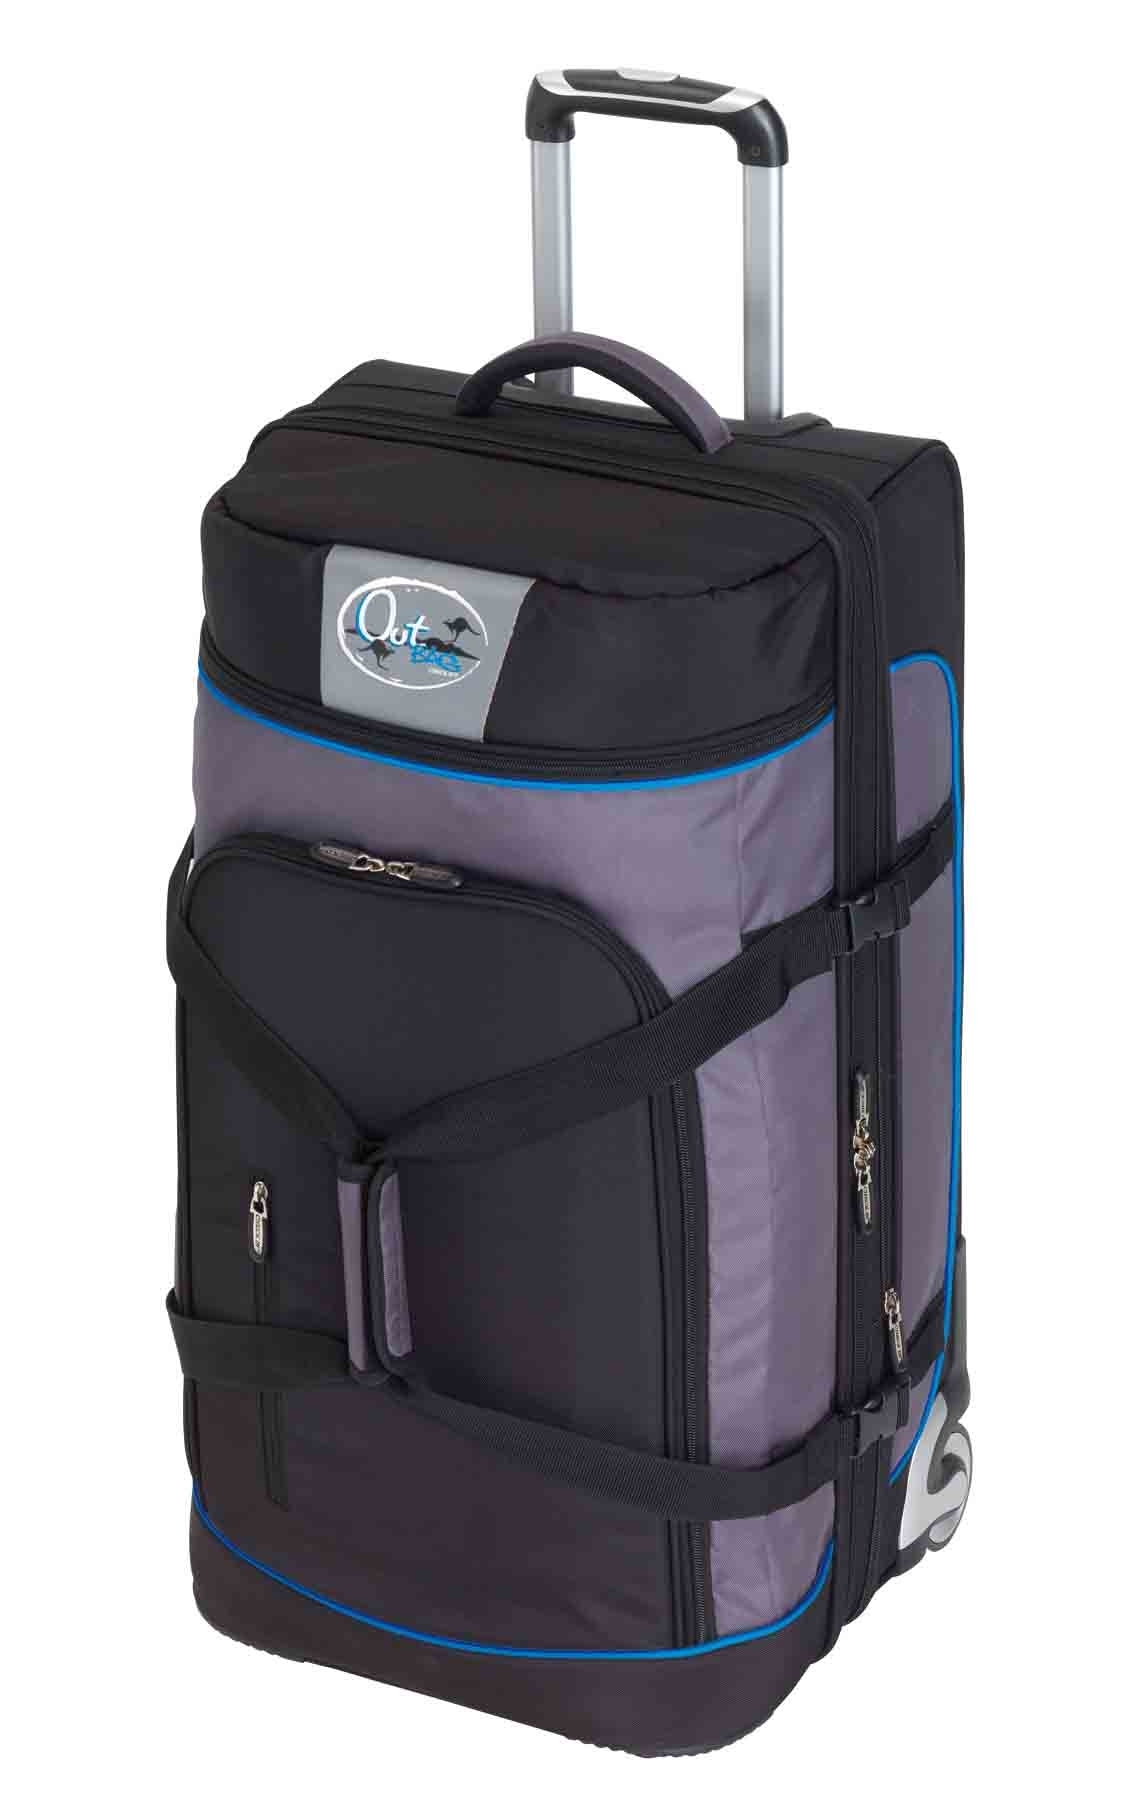 Image of Trolley-Travel Bag "OutBAG Sports" aus ABS/PC in schwarz und blau